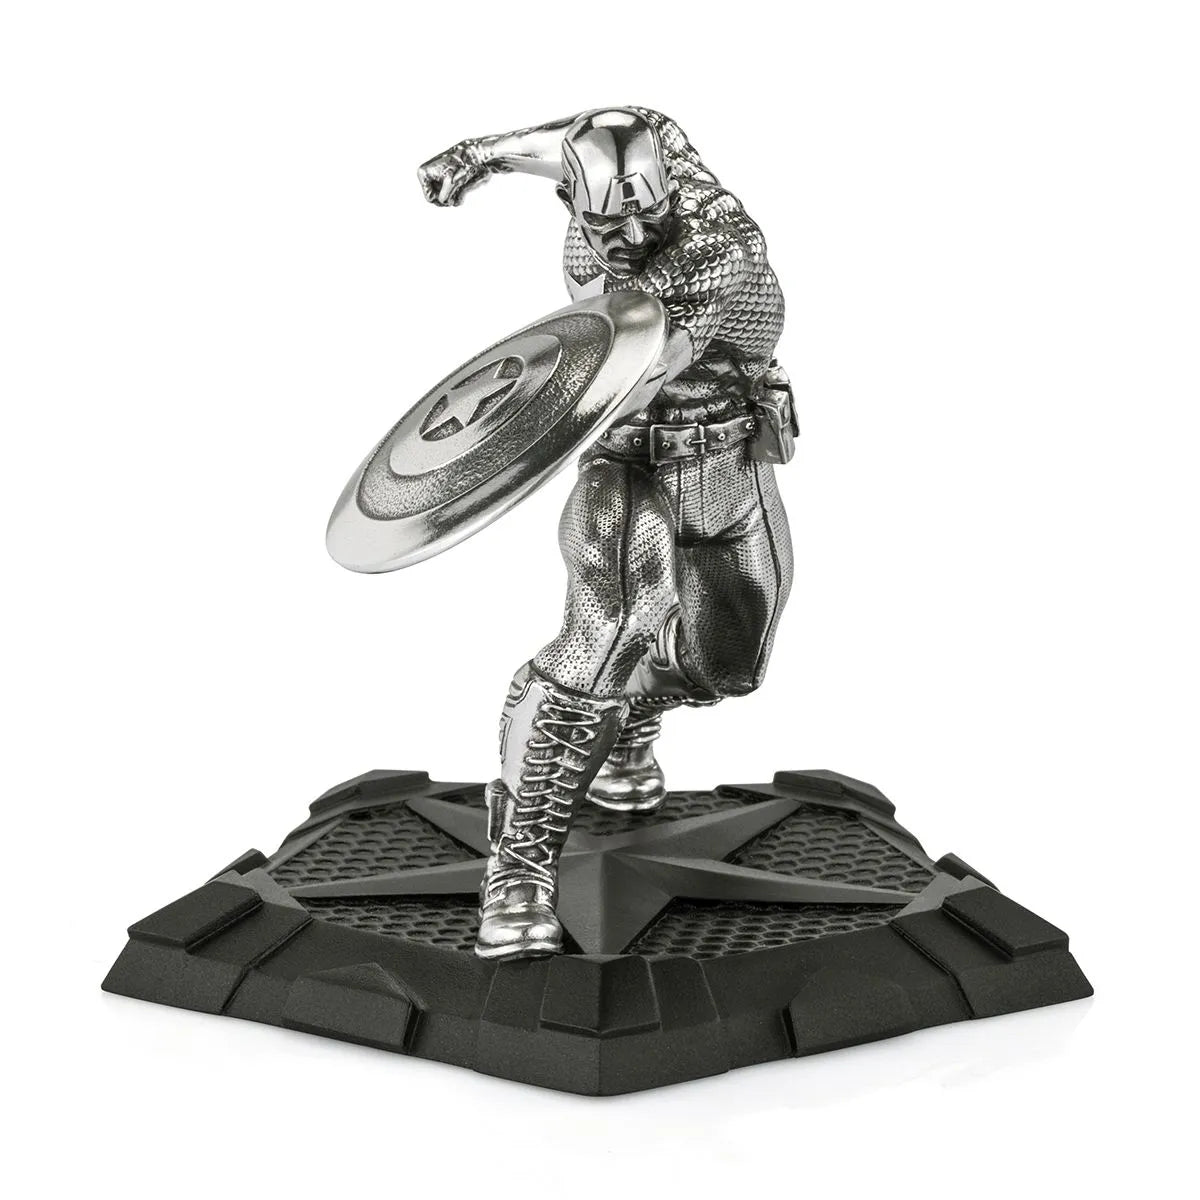 Captain America First Avenger Limited Edition Metal Figurine by Royal Selangor -Royal Selangor - India - www.superherotoystore.com